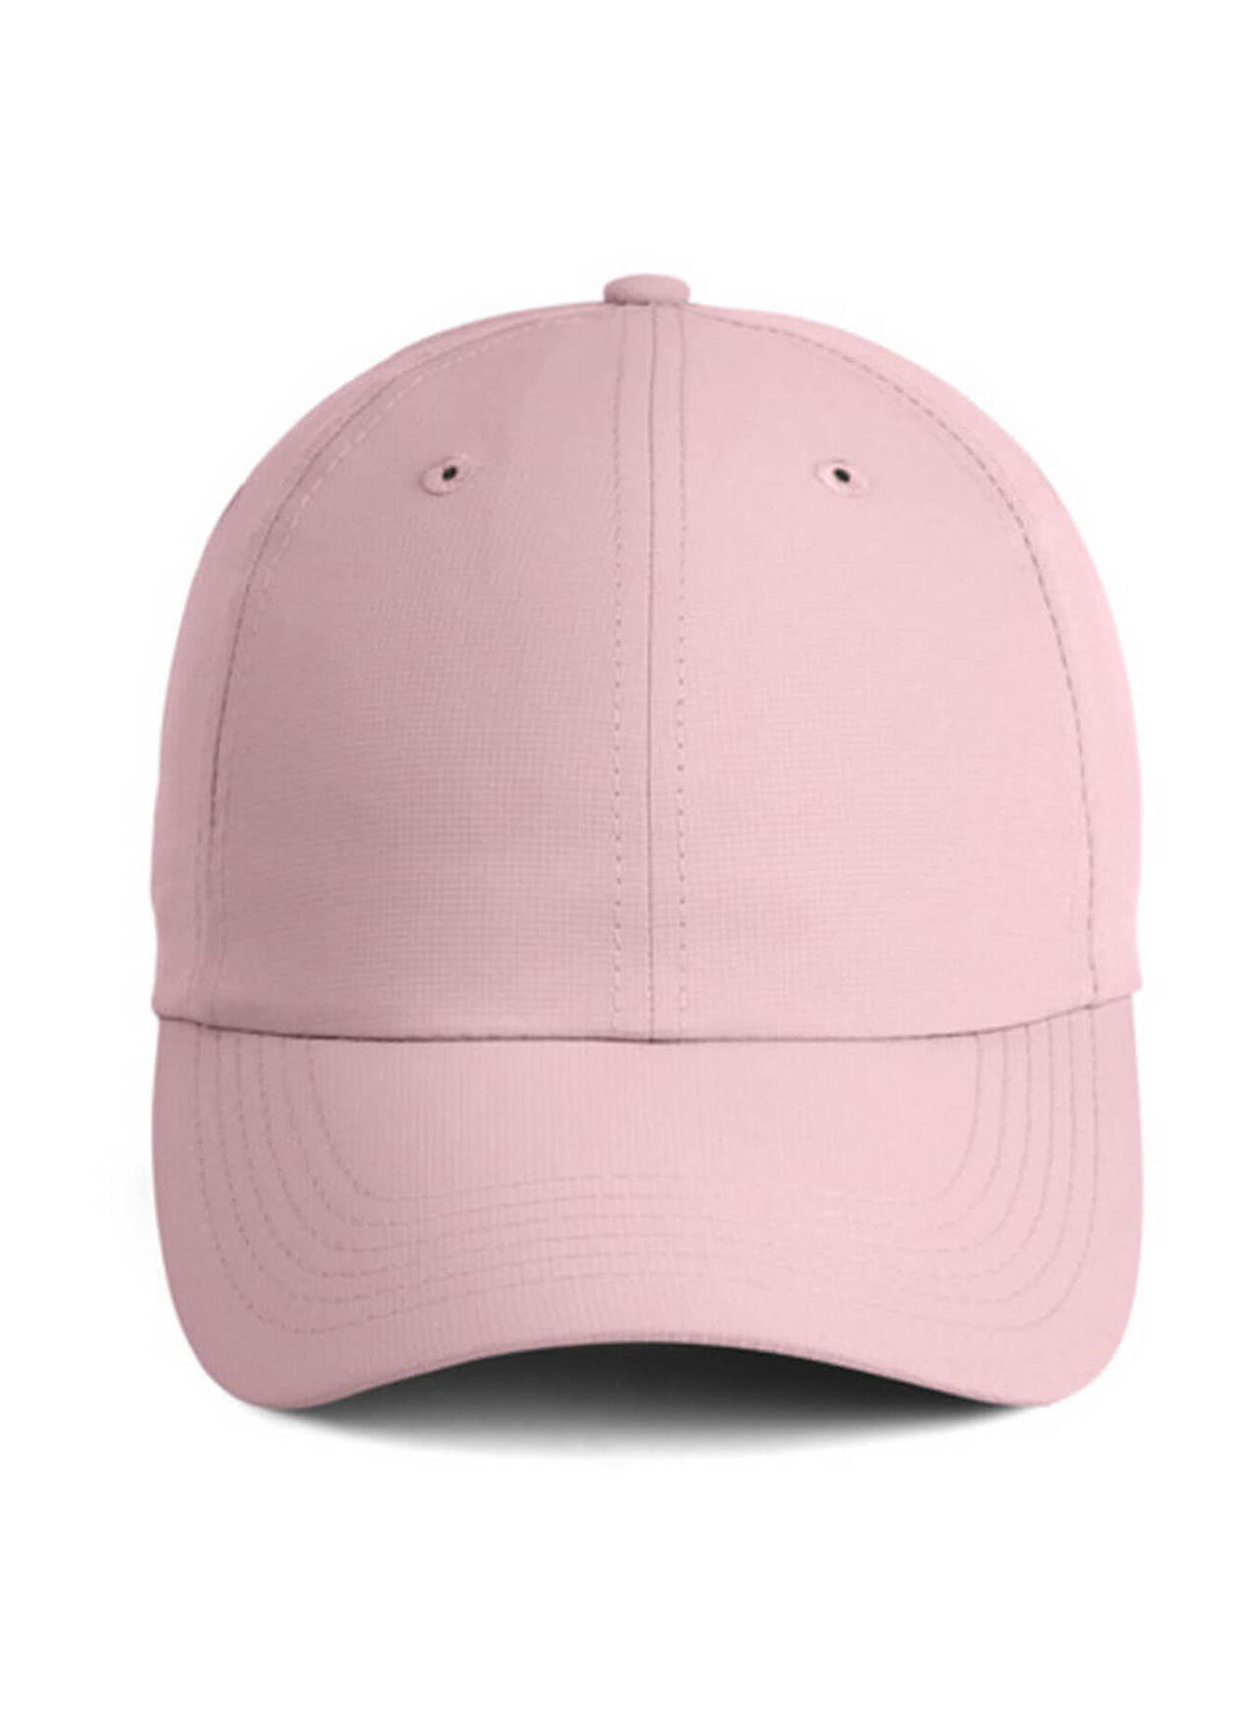 Imperial Light Pink Original Performance Hat